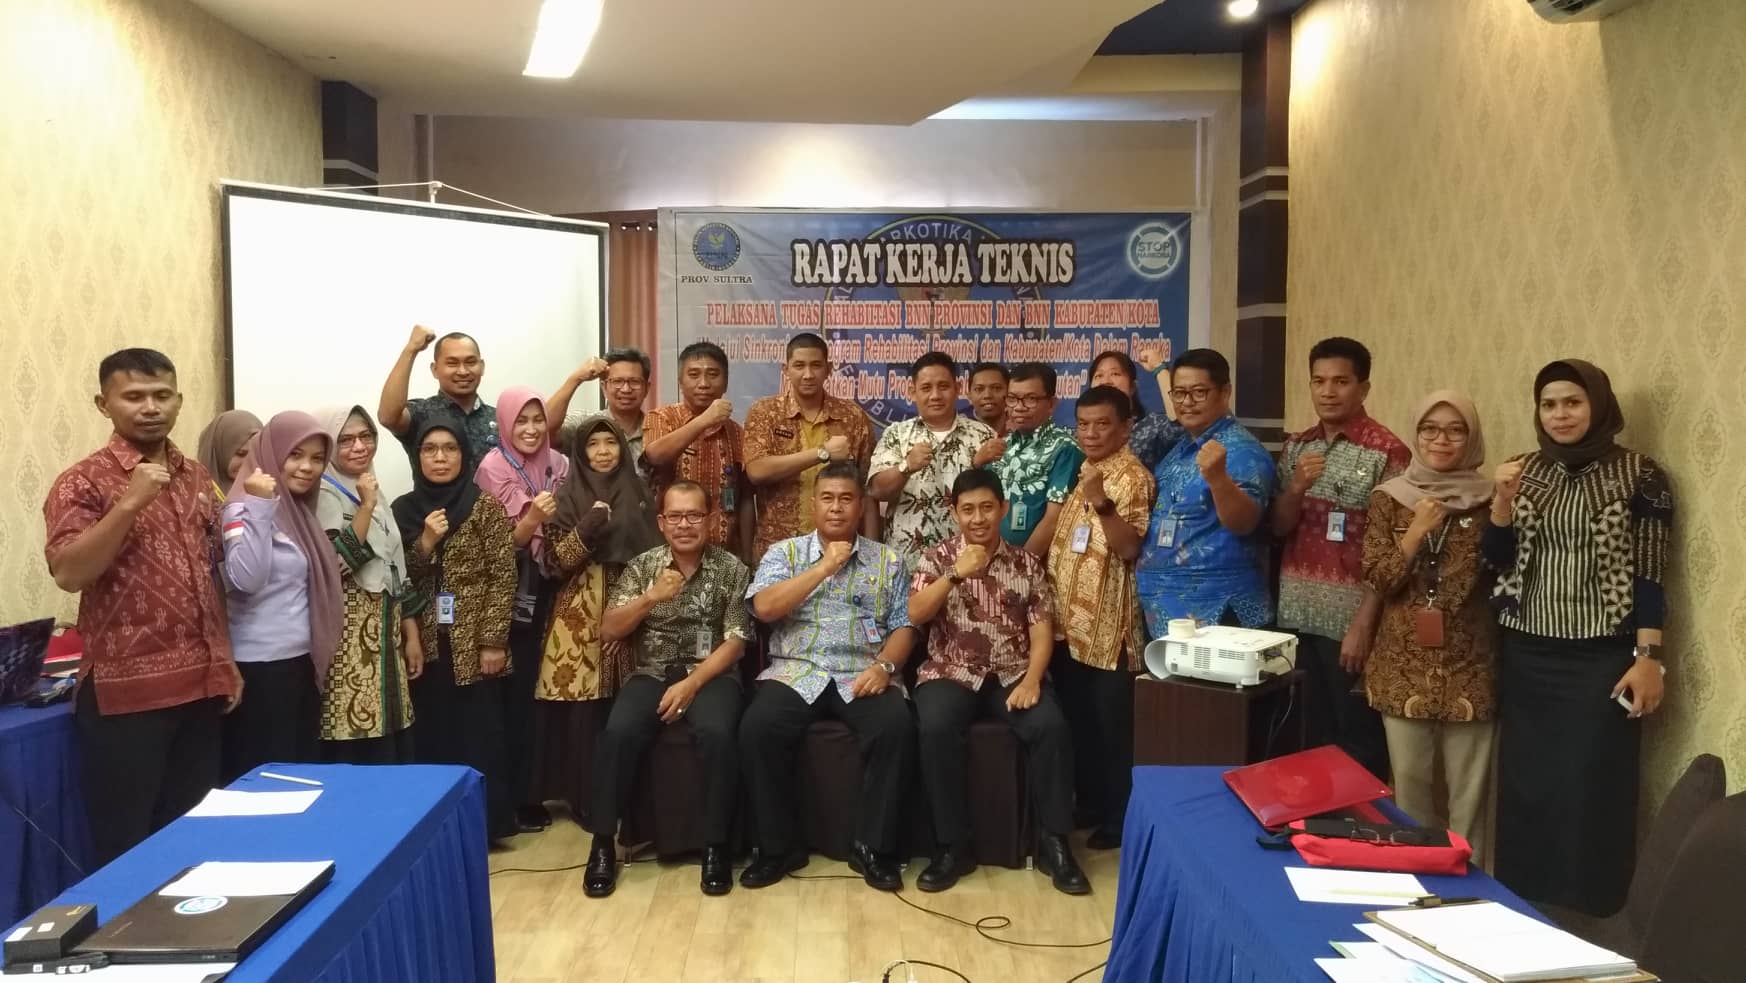 Rapat Kerja Teknis Pelaksana Tugas Rehabilitasi BNN Provinsi dan BNN Kabupaten/Kota se-Sulawesi Tenggara